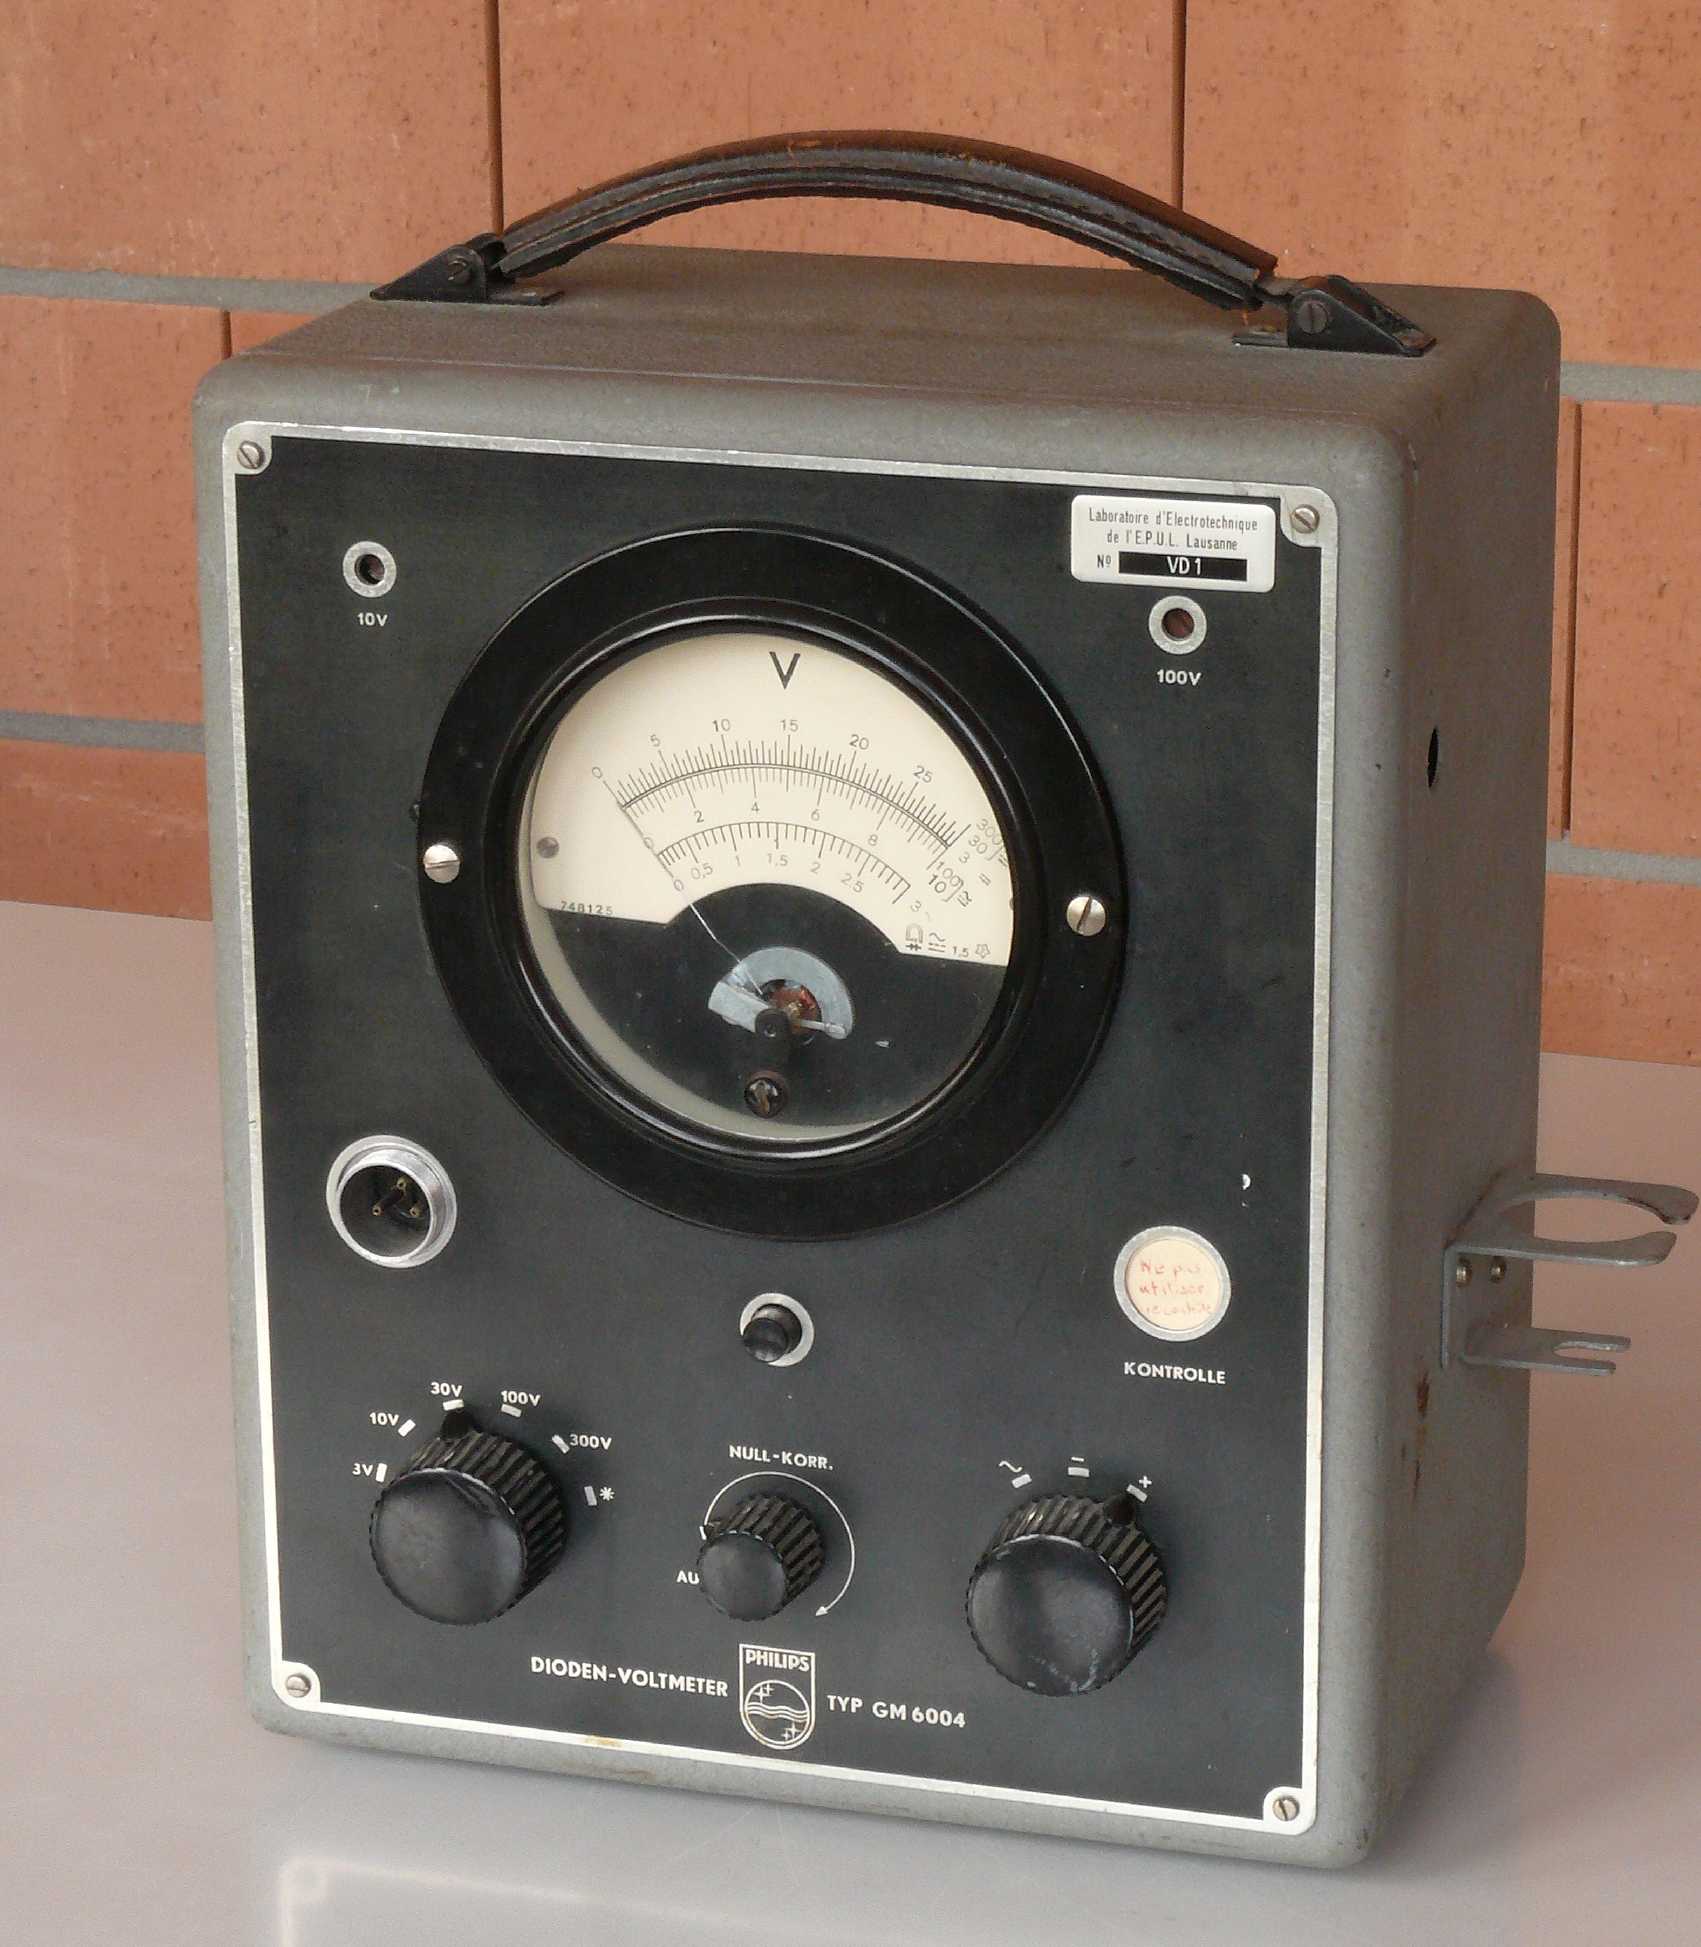 Voltmètre à diode
(Philips GM 6004)